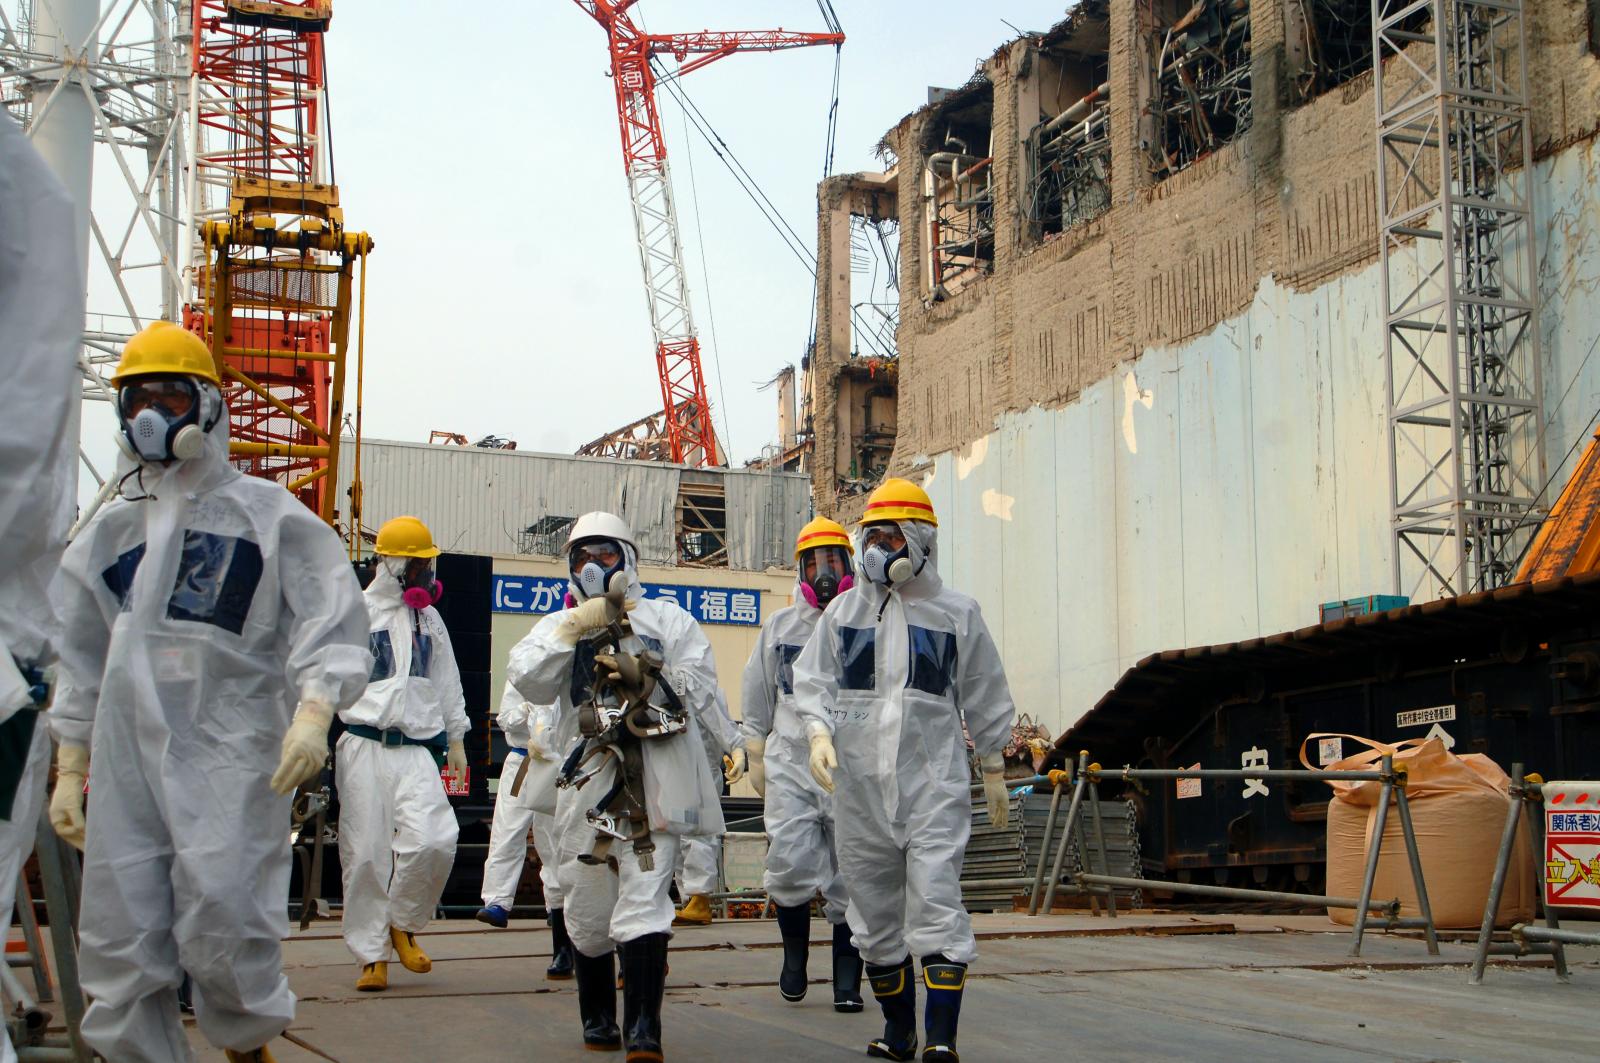 IAEA experts depart Unit 4 of TEPCO's Fukushima Daiichi Nuclear Power Station on 17 April 2013